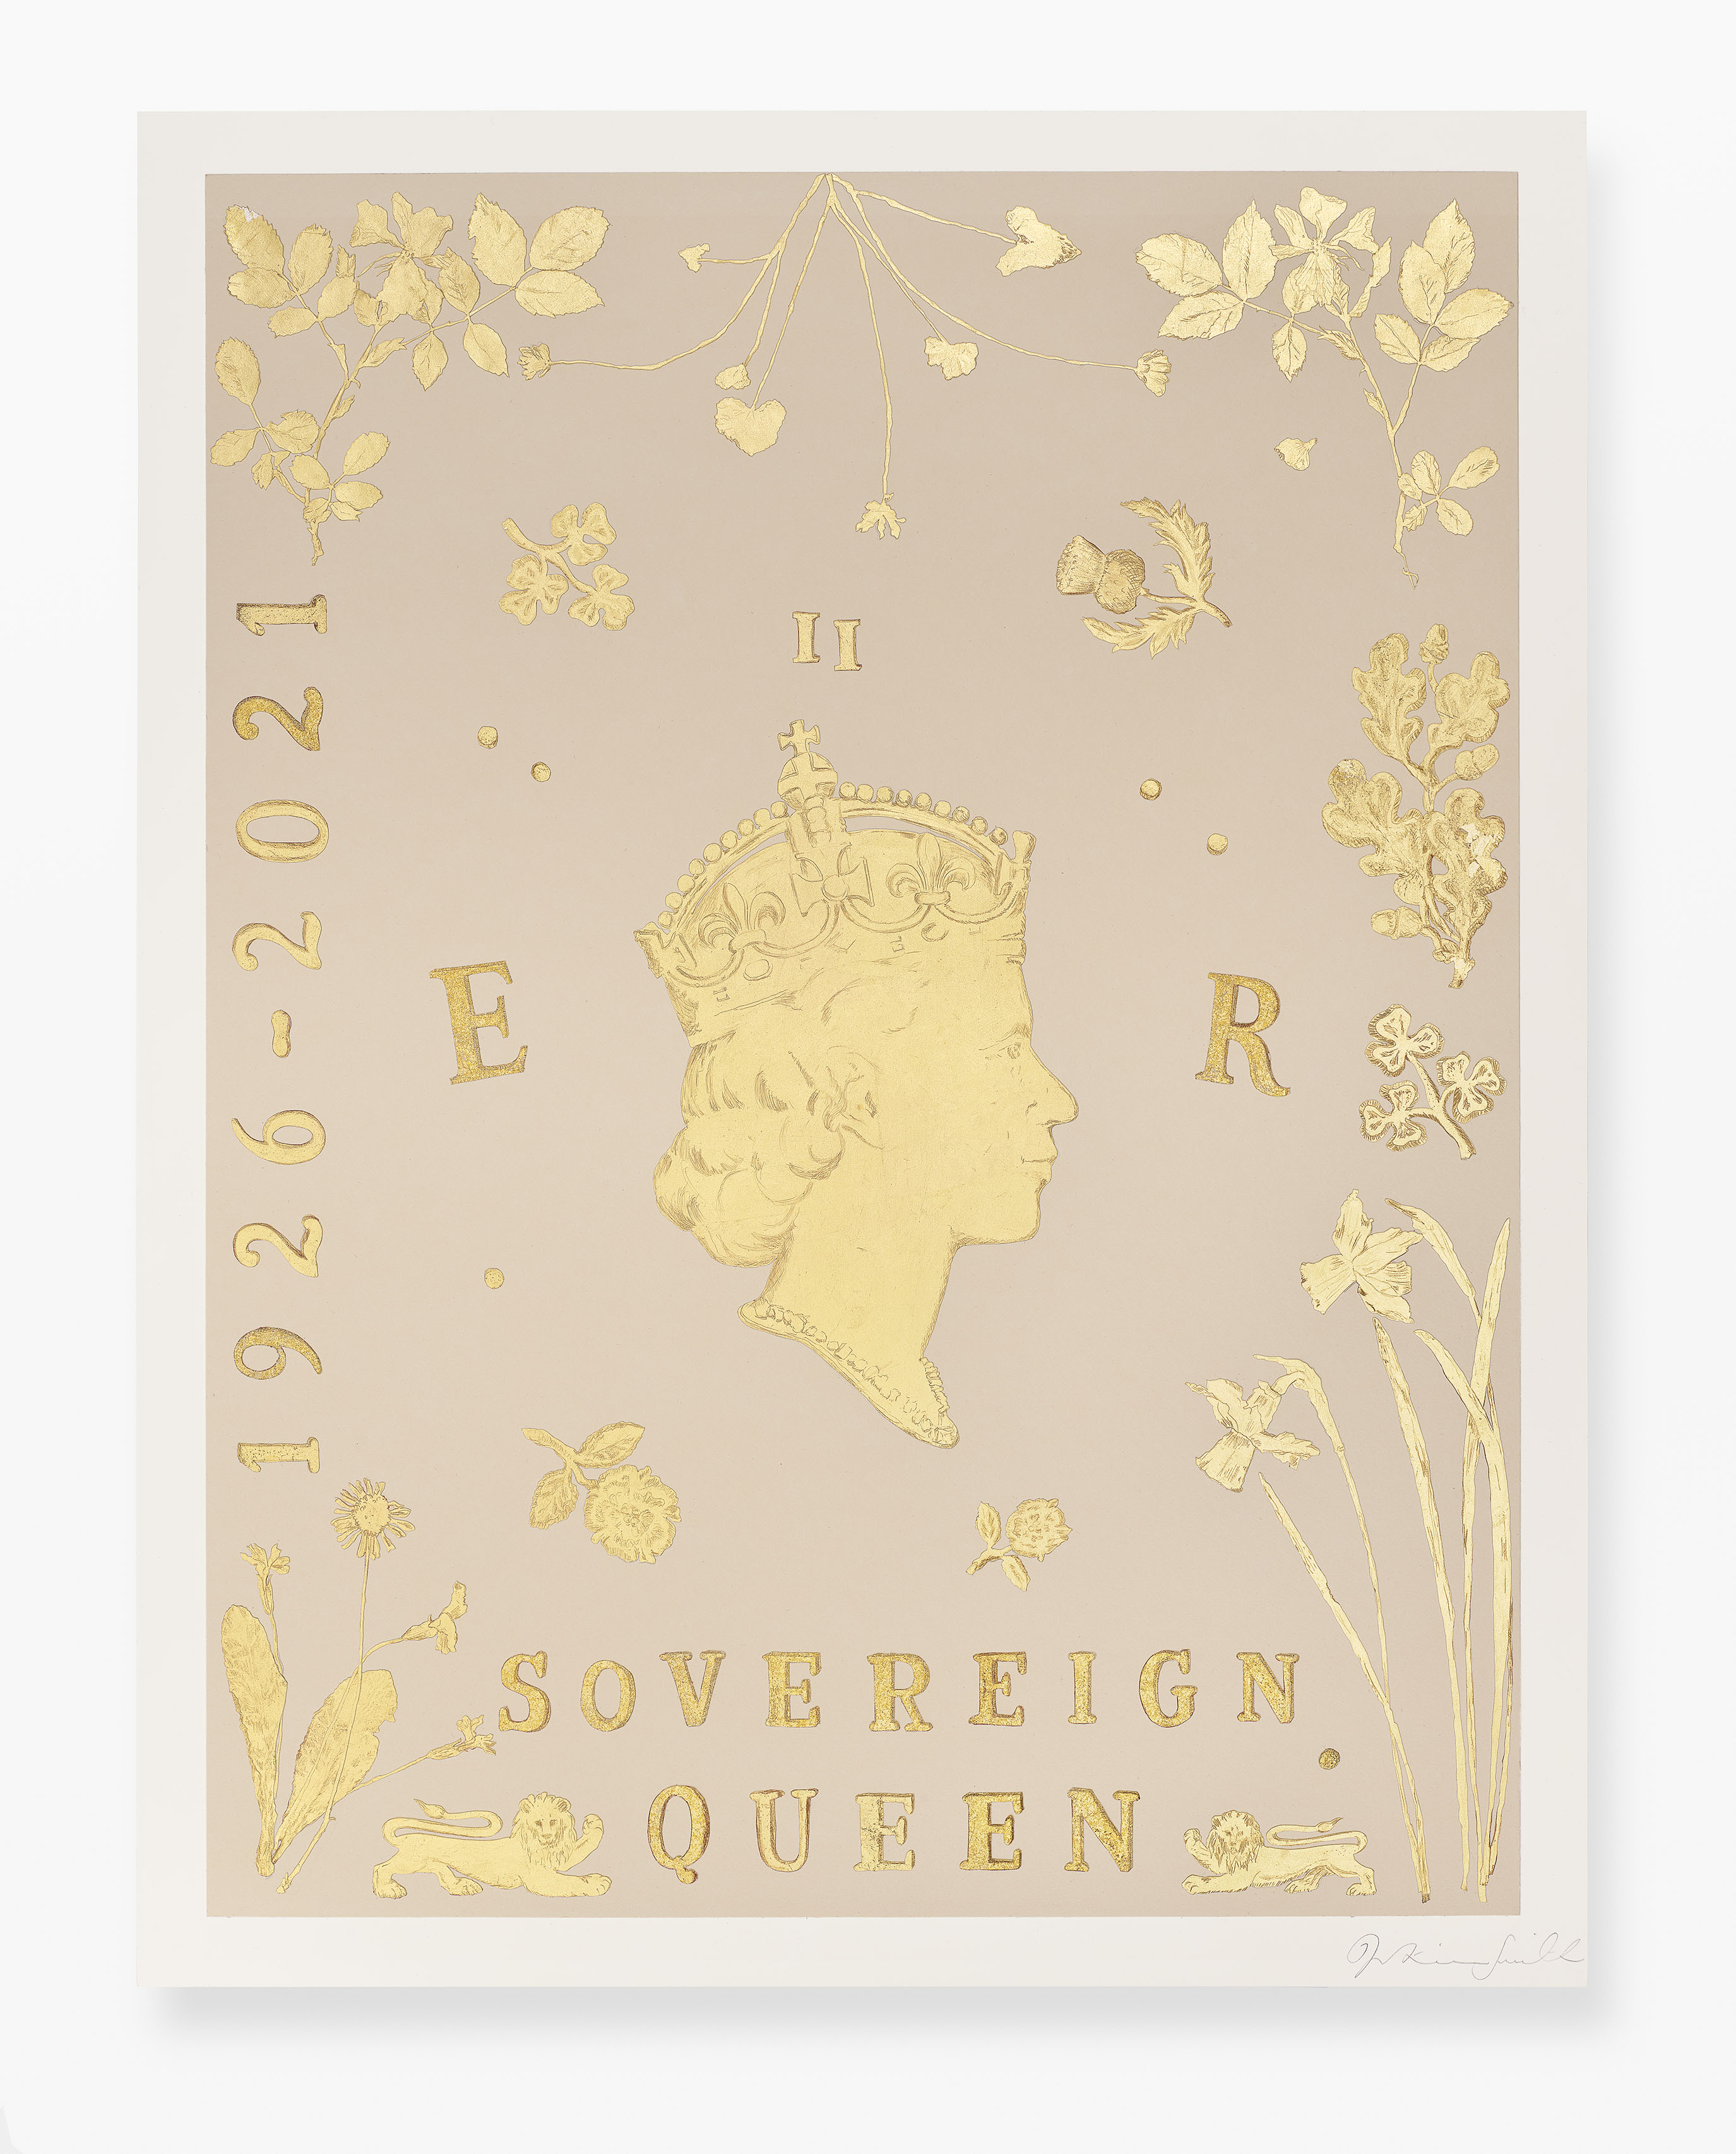 Sovereign Queen. Collage